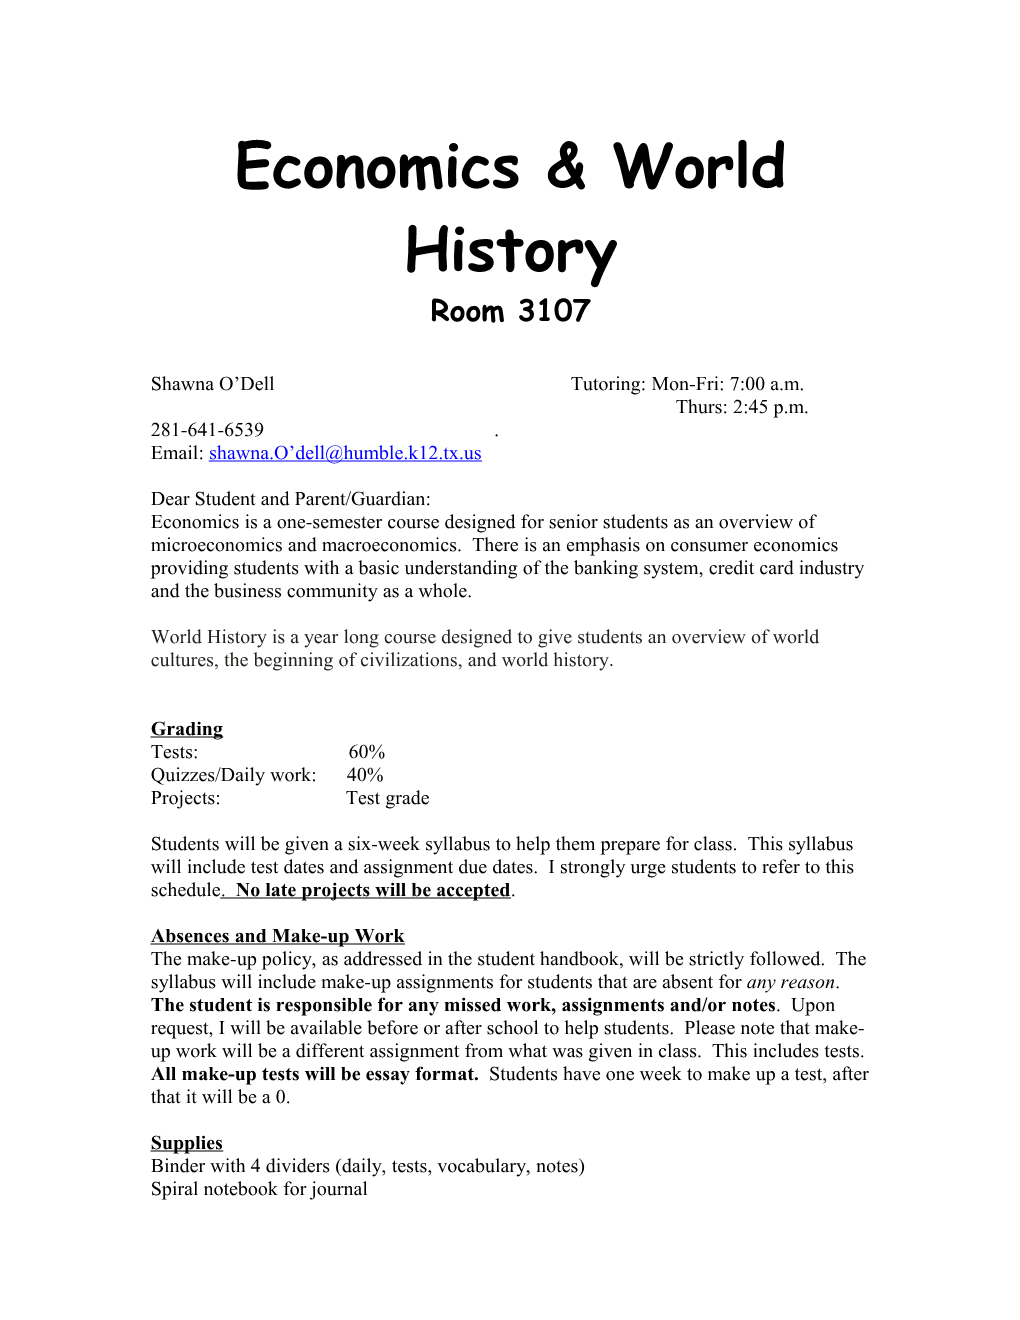 Economics & World History